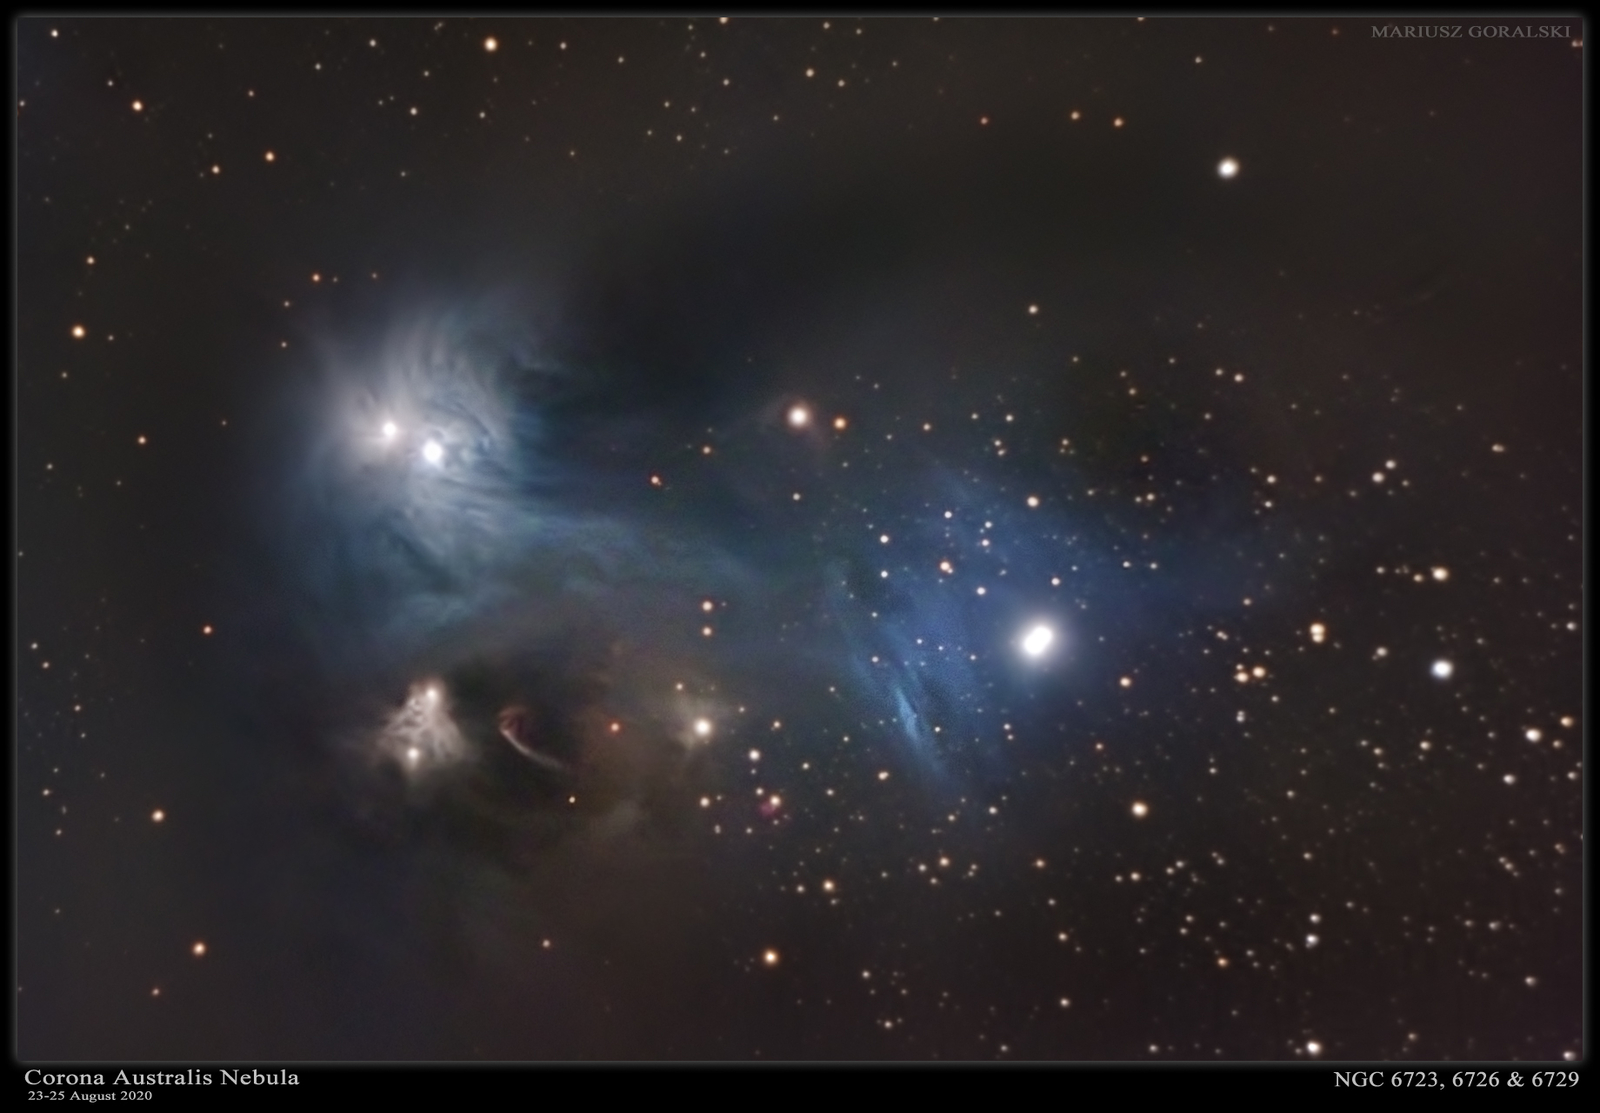 Corona Australis - NGC6726 RGB F10 23-25 Aug 2020